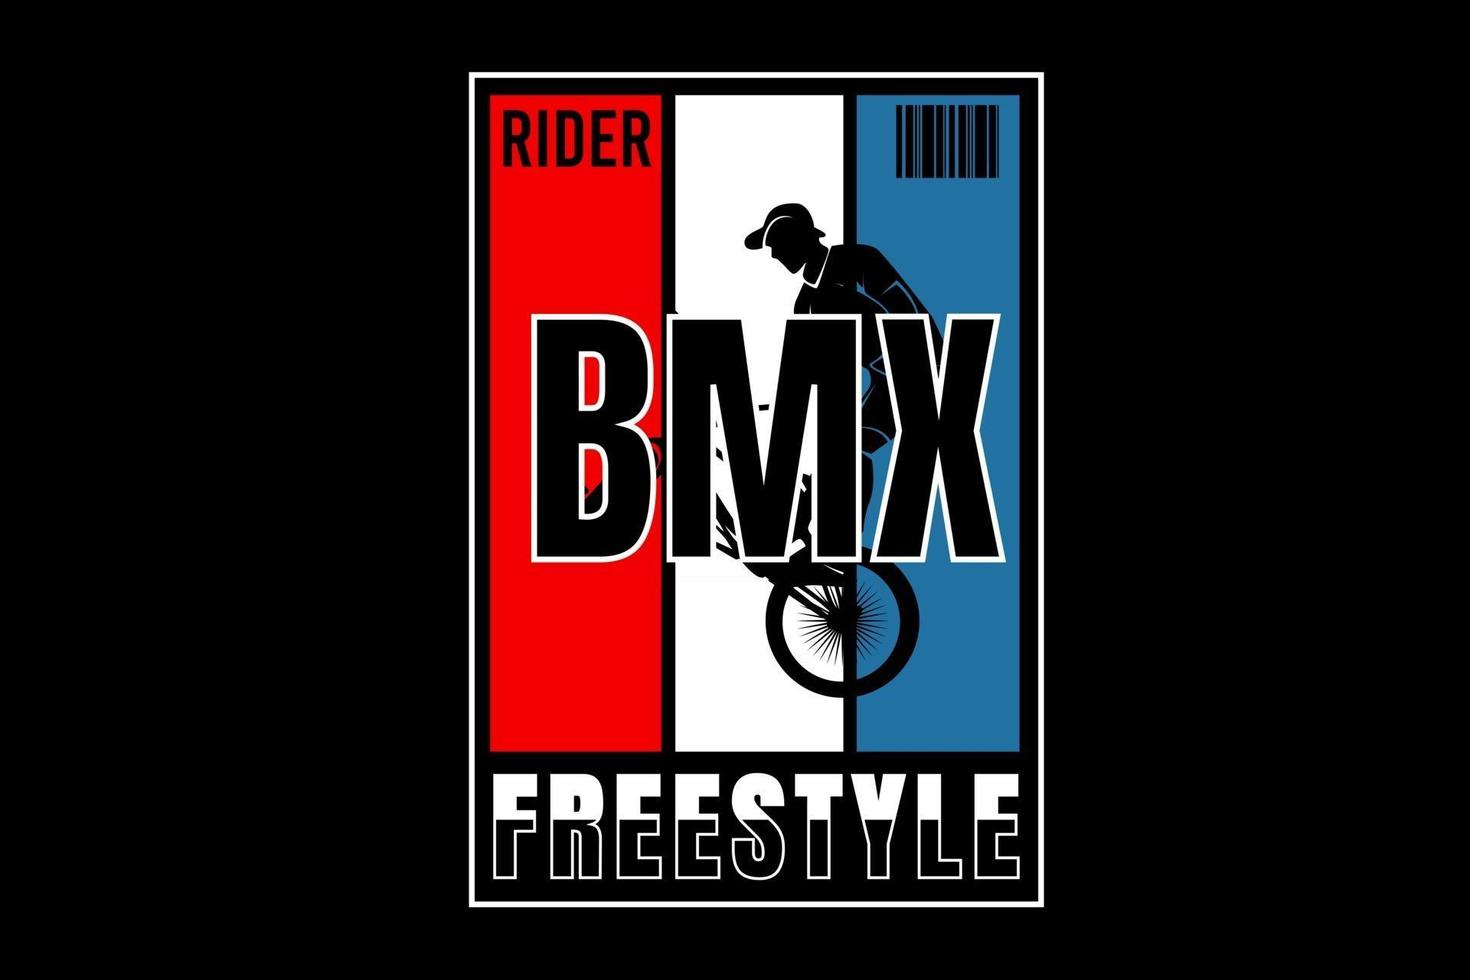 rider bike motocross freestyle cor vermelho branco e azul vetor